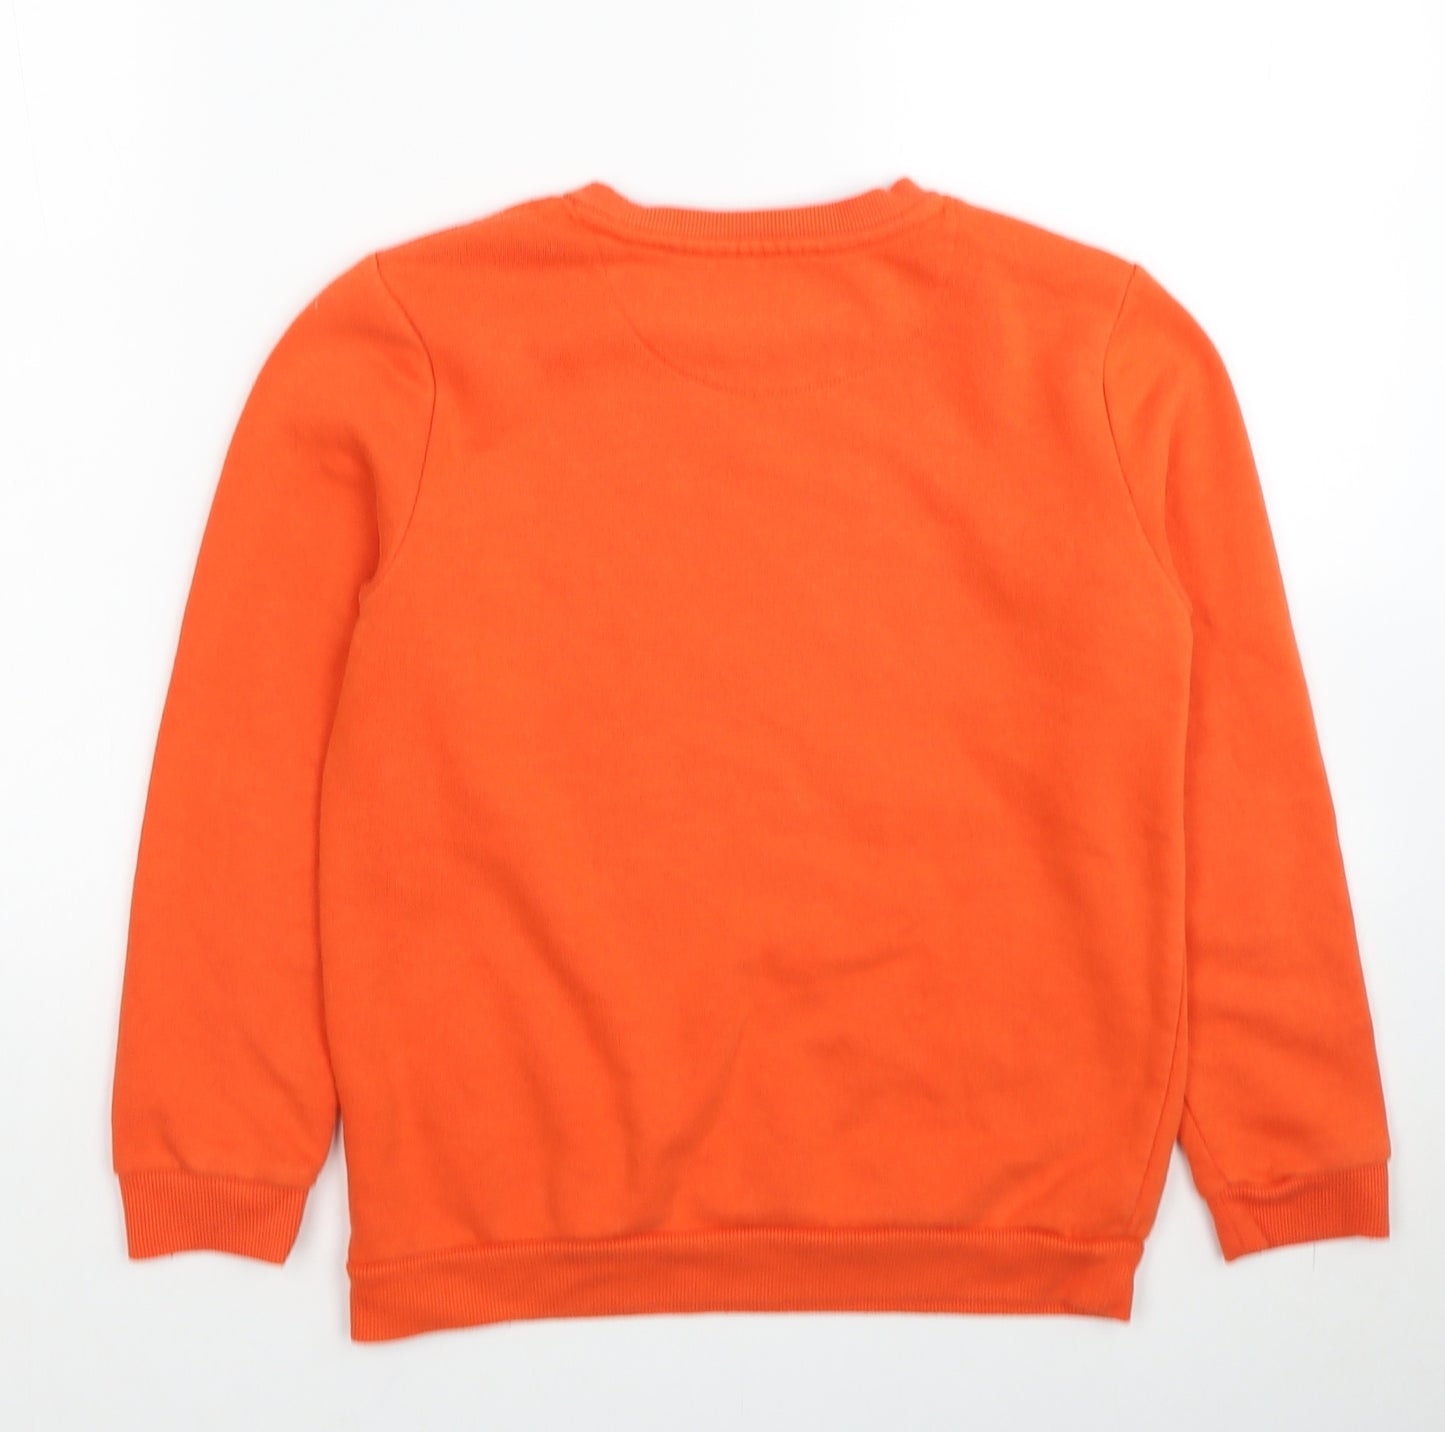 Primark Boys Orange Cotton Pullover Sweatshirt Size 9-10 Years Pullover - We are the Future Generation